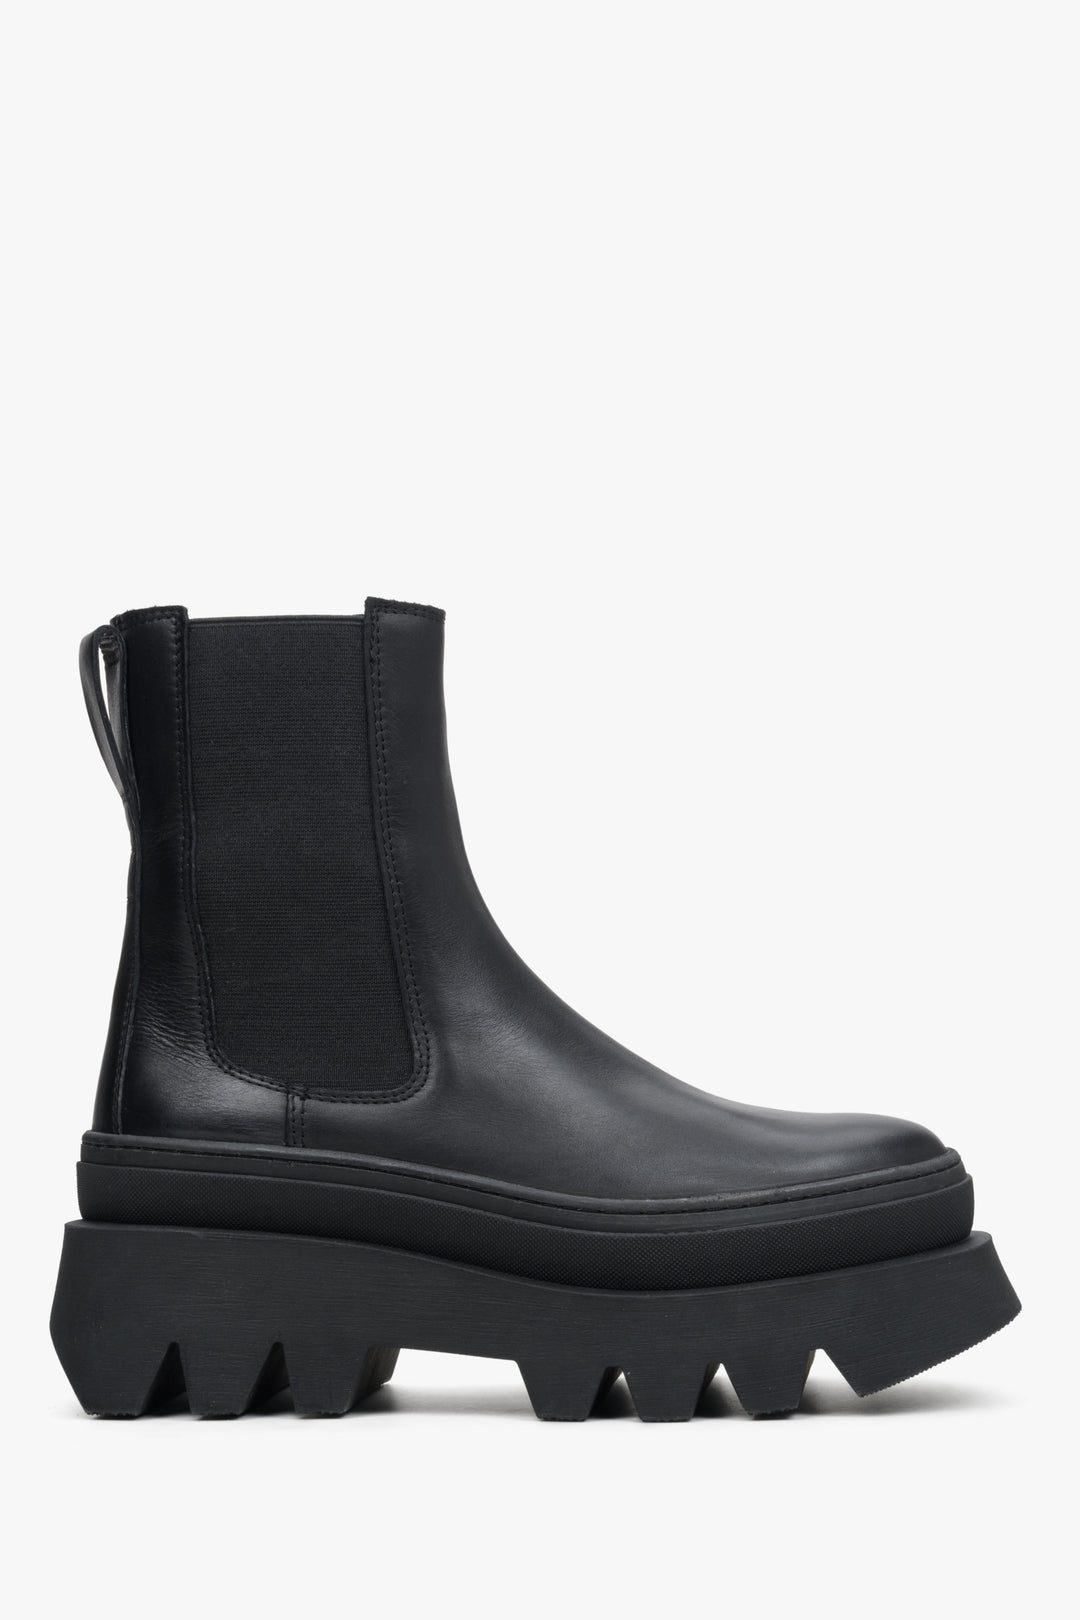 Women's Black Chelsea Boots made of Genuine Leather on a Platform Estro ER00113687.